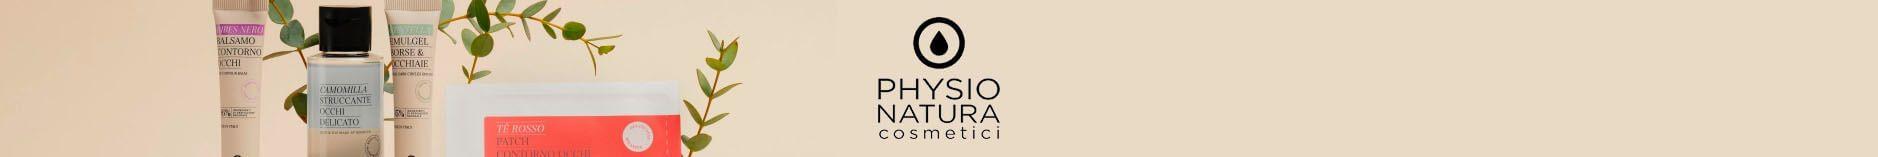 Physio Natura Cosmetici